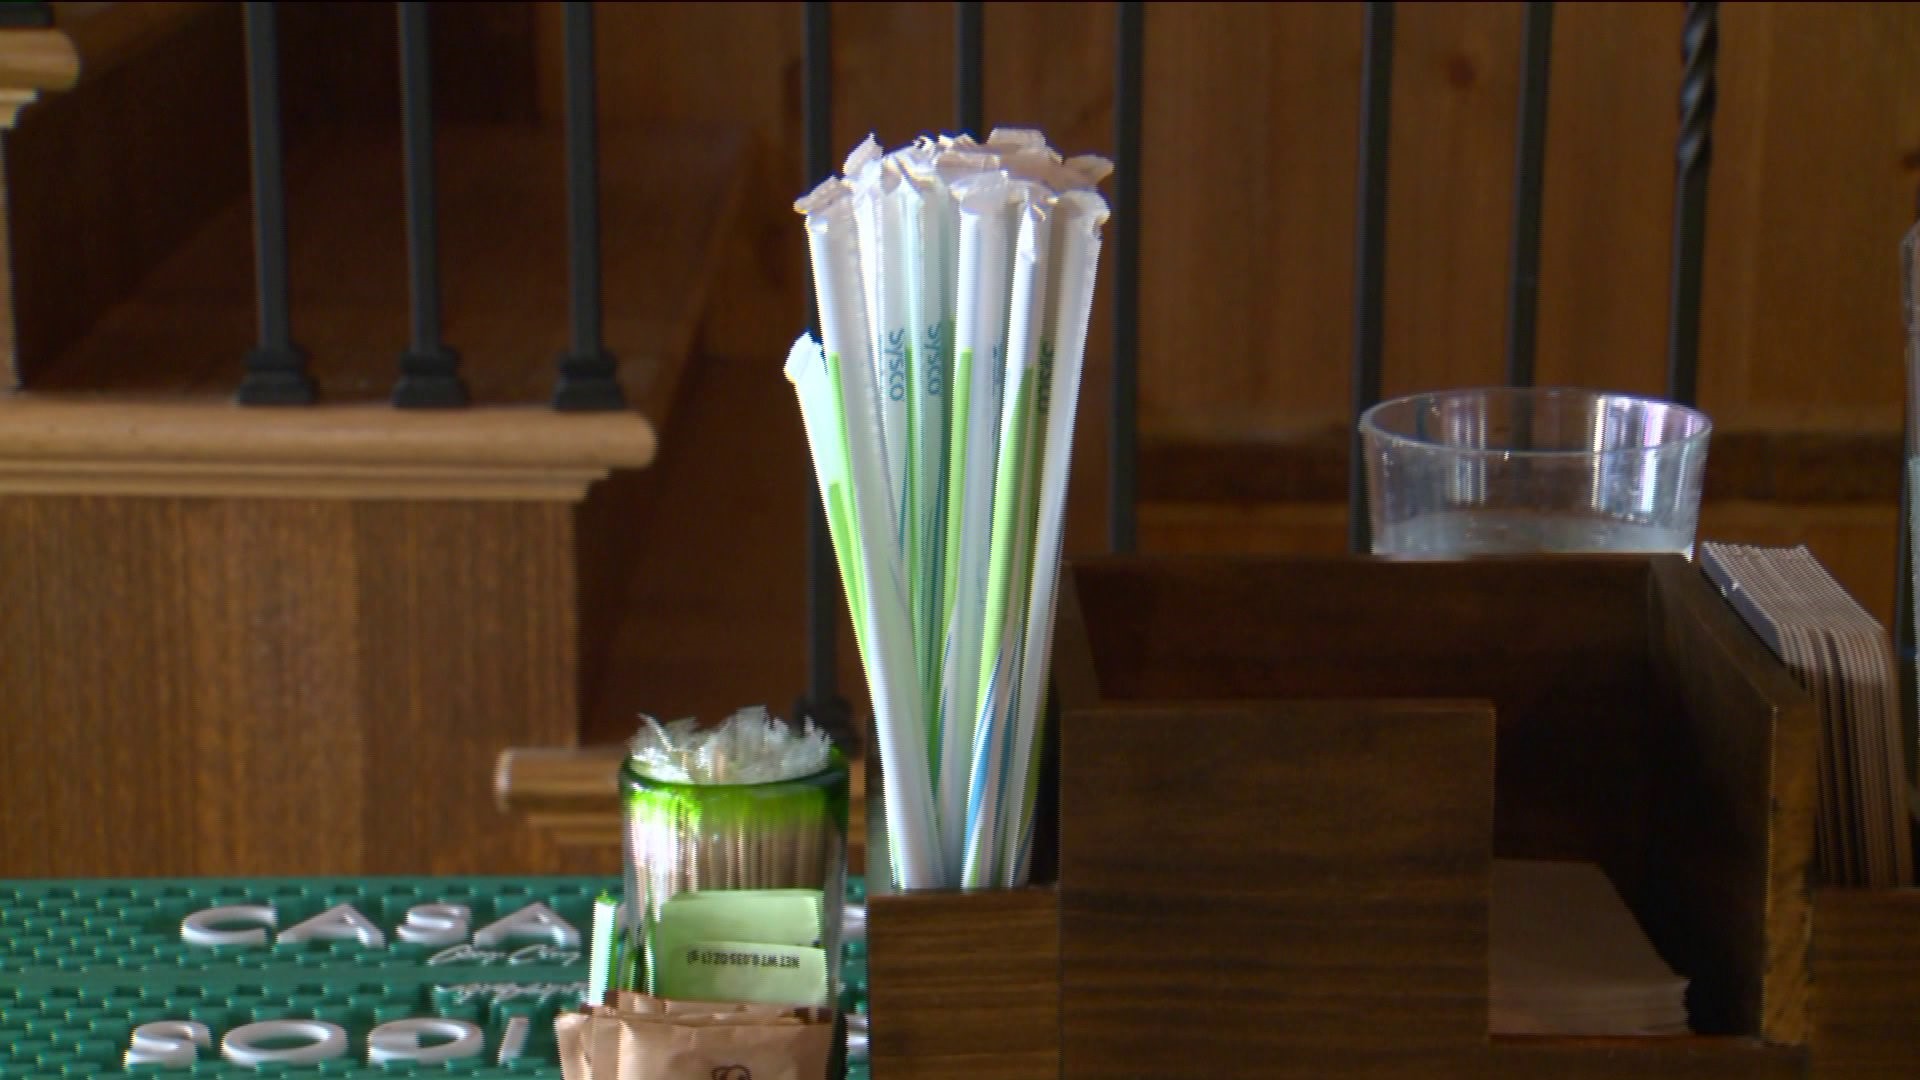 Stonington considering a ban on plastic bags, straws